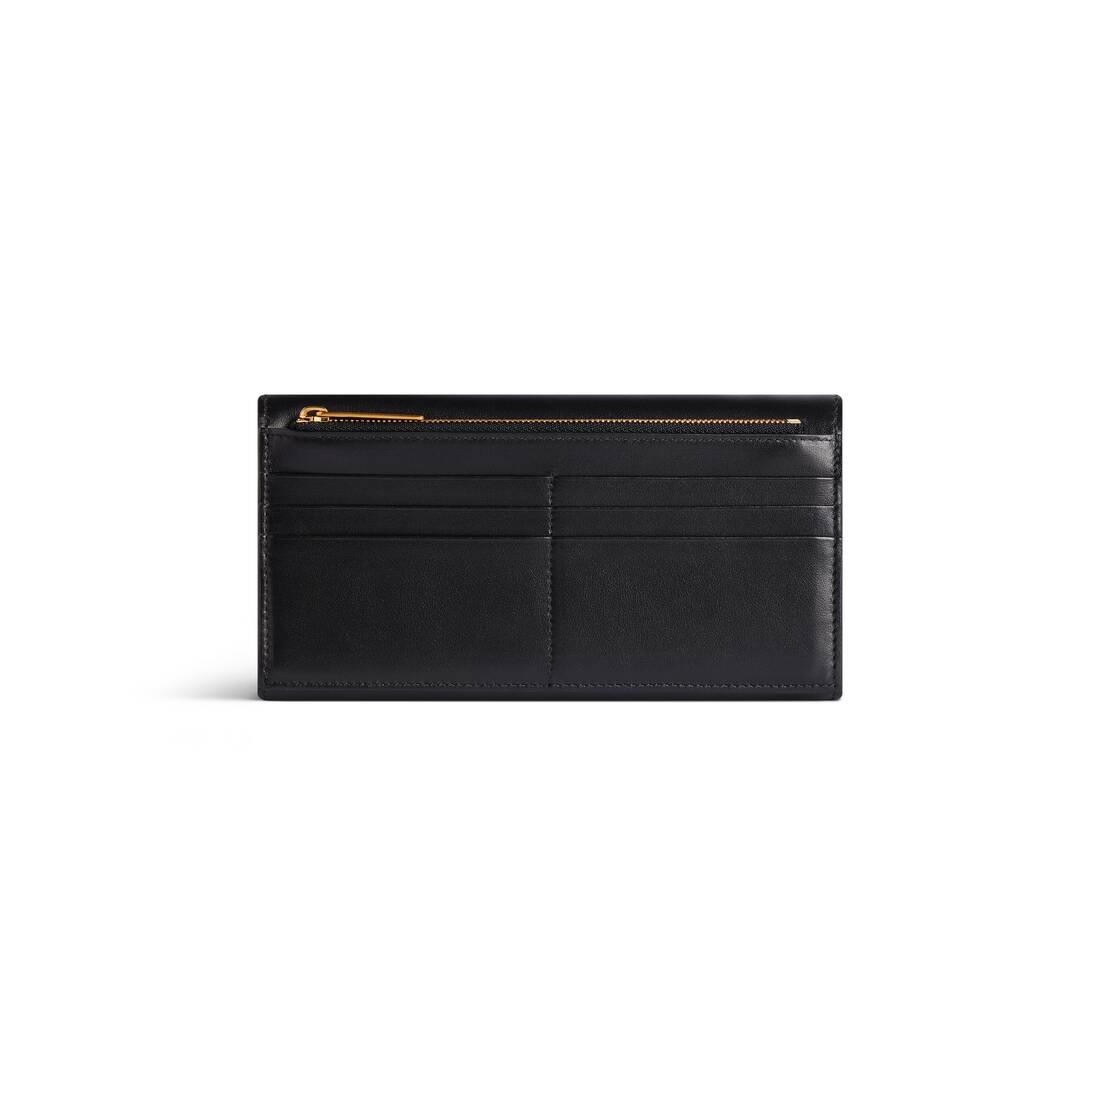 Women's Envelope Long Wallet With Card Holder in Black - 2